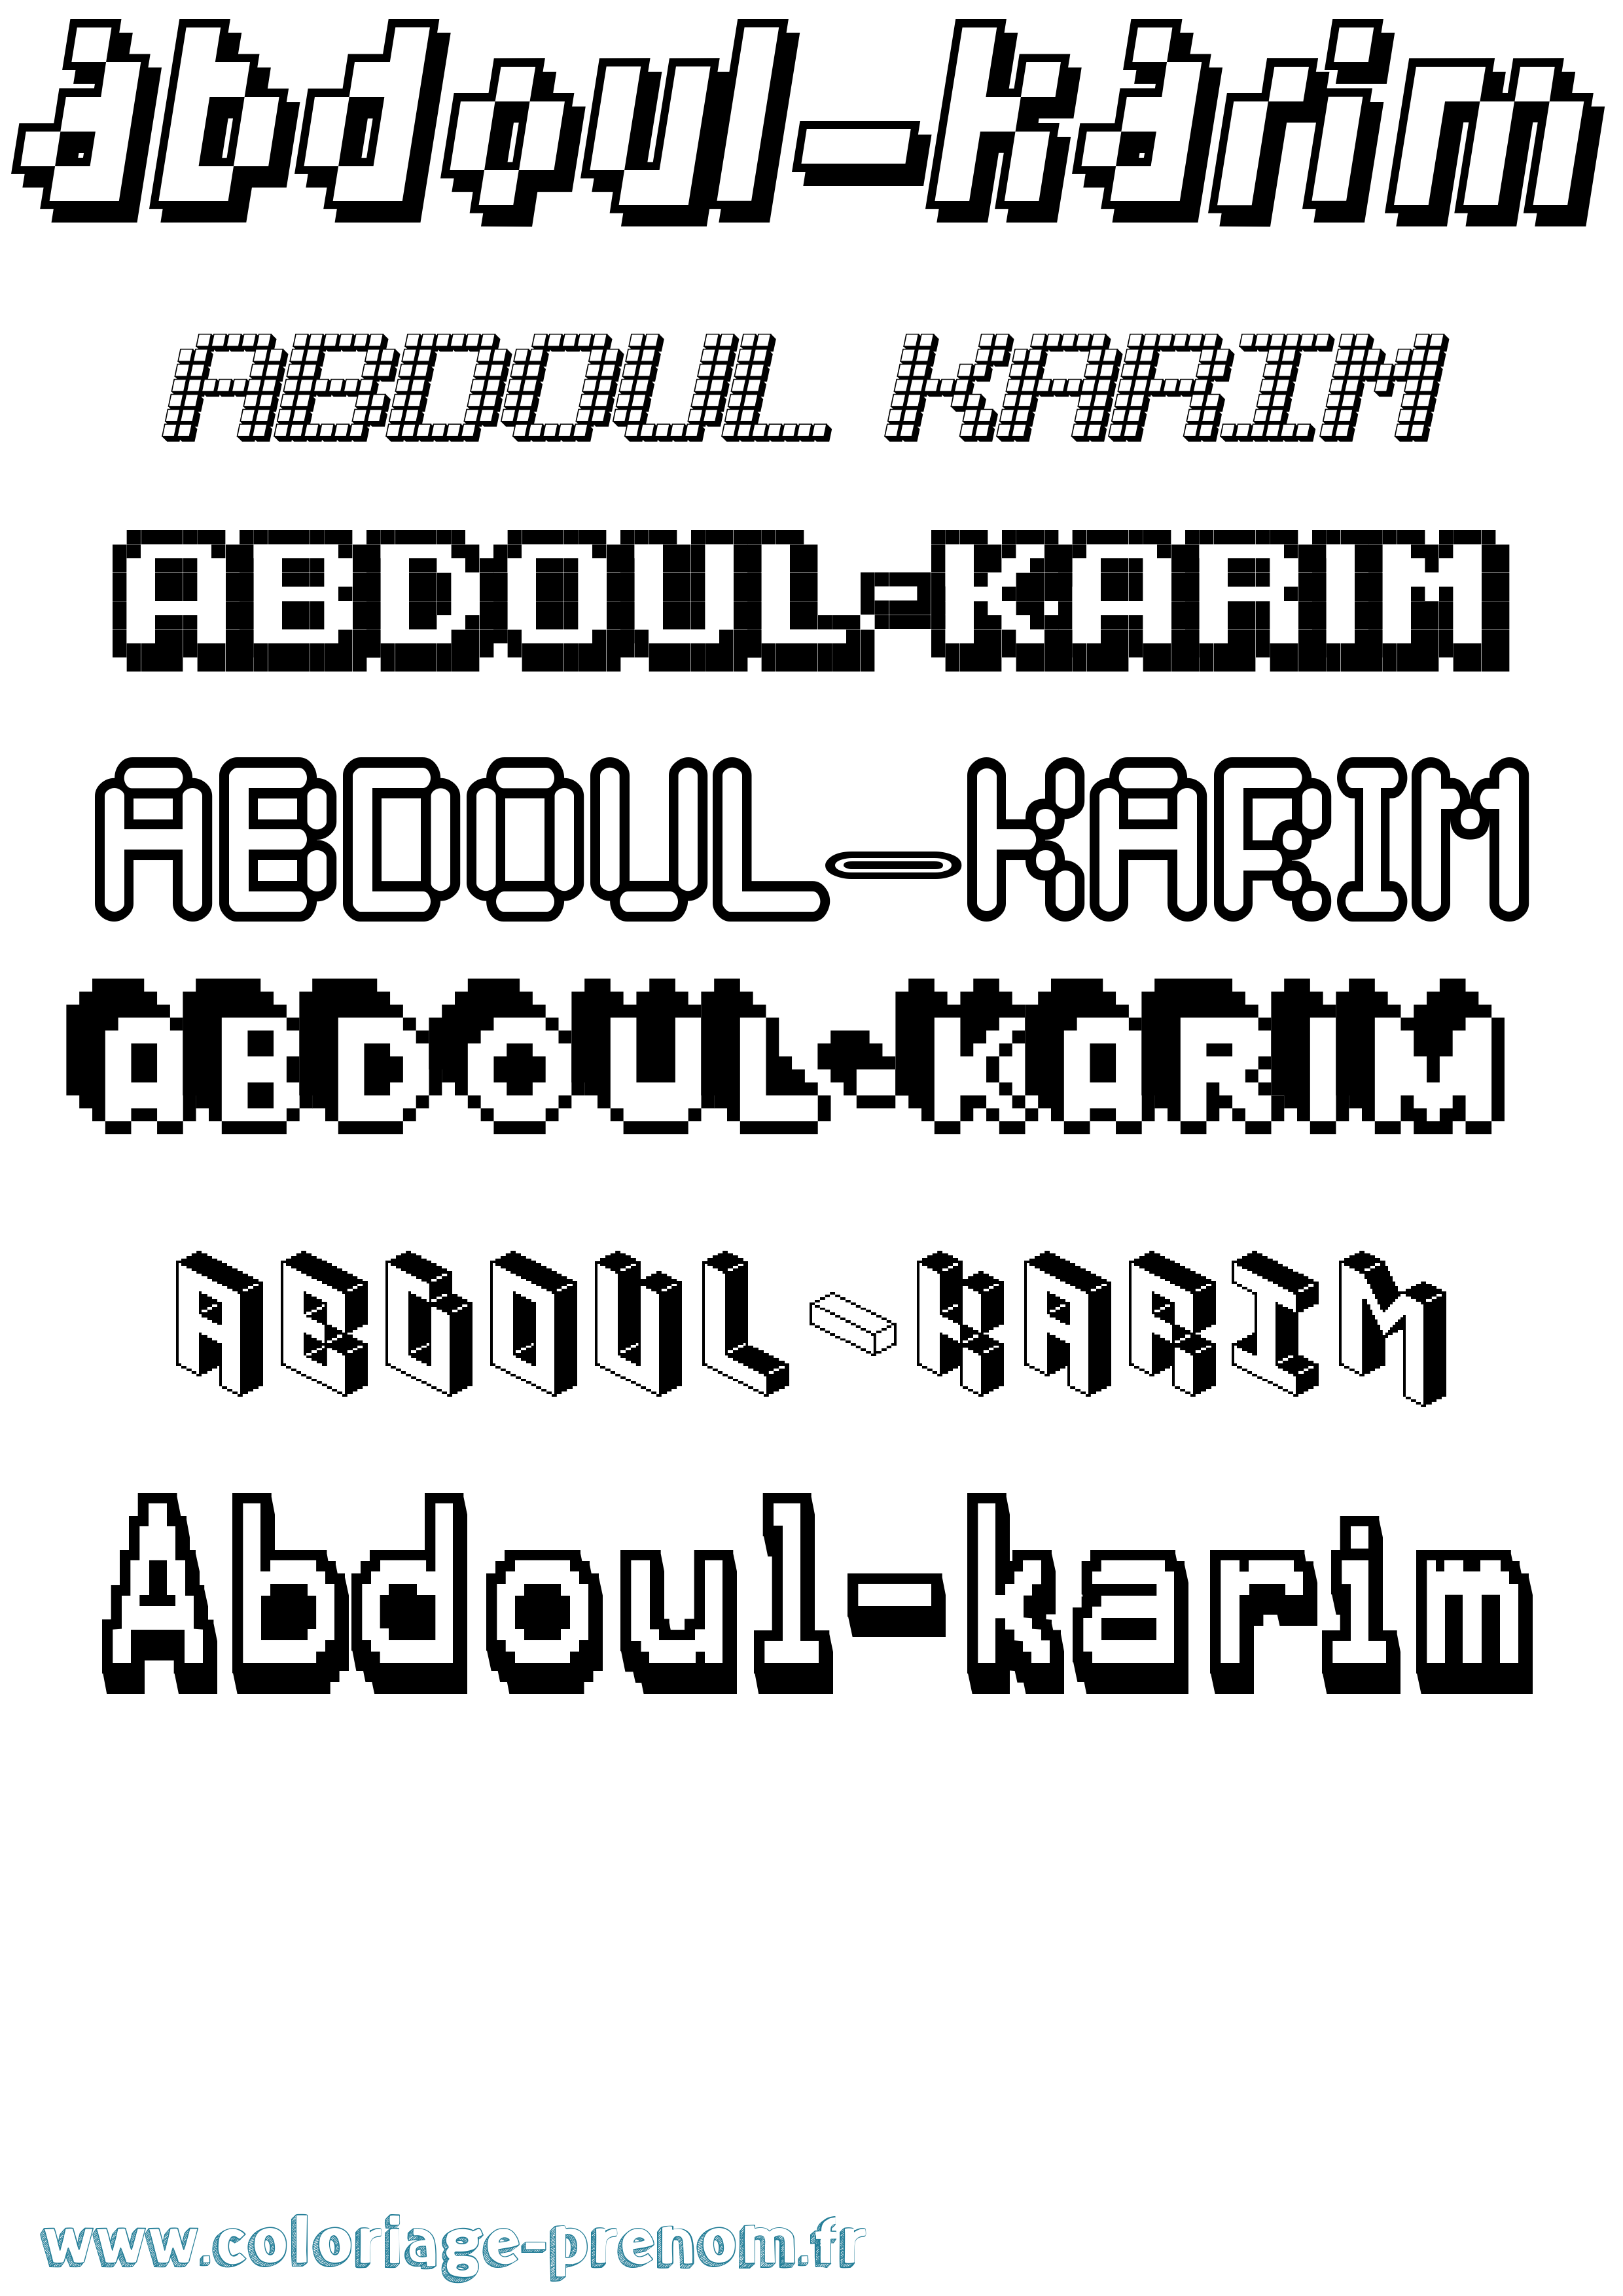 Coloriage prénom Abdoul-Karim Pixel